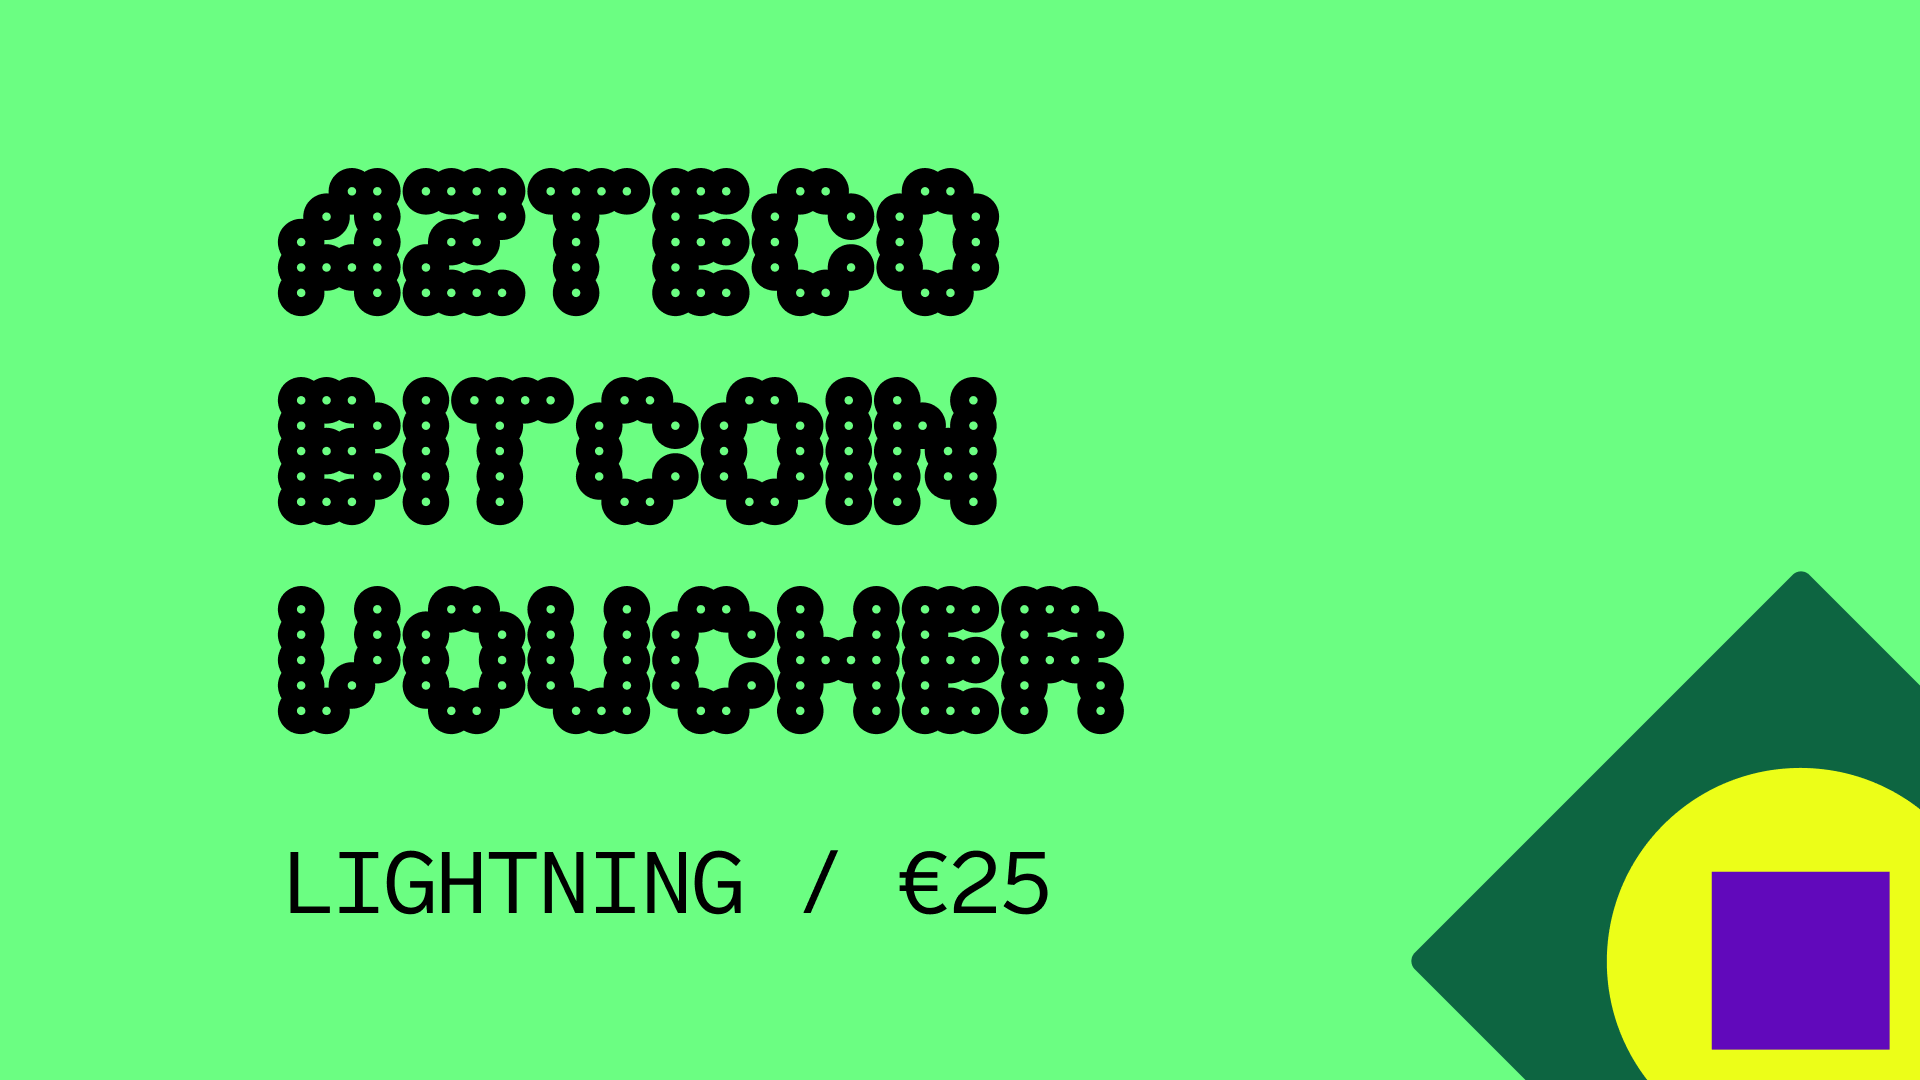 [$ 28.25] Azteco Bitcoin Lighting €25 Voucher